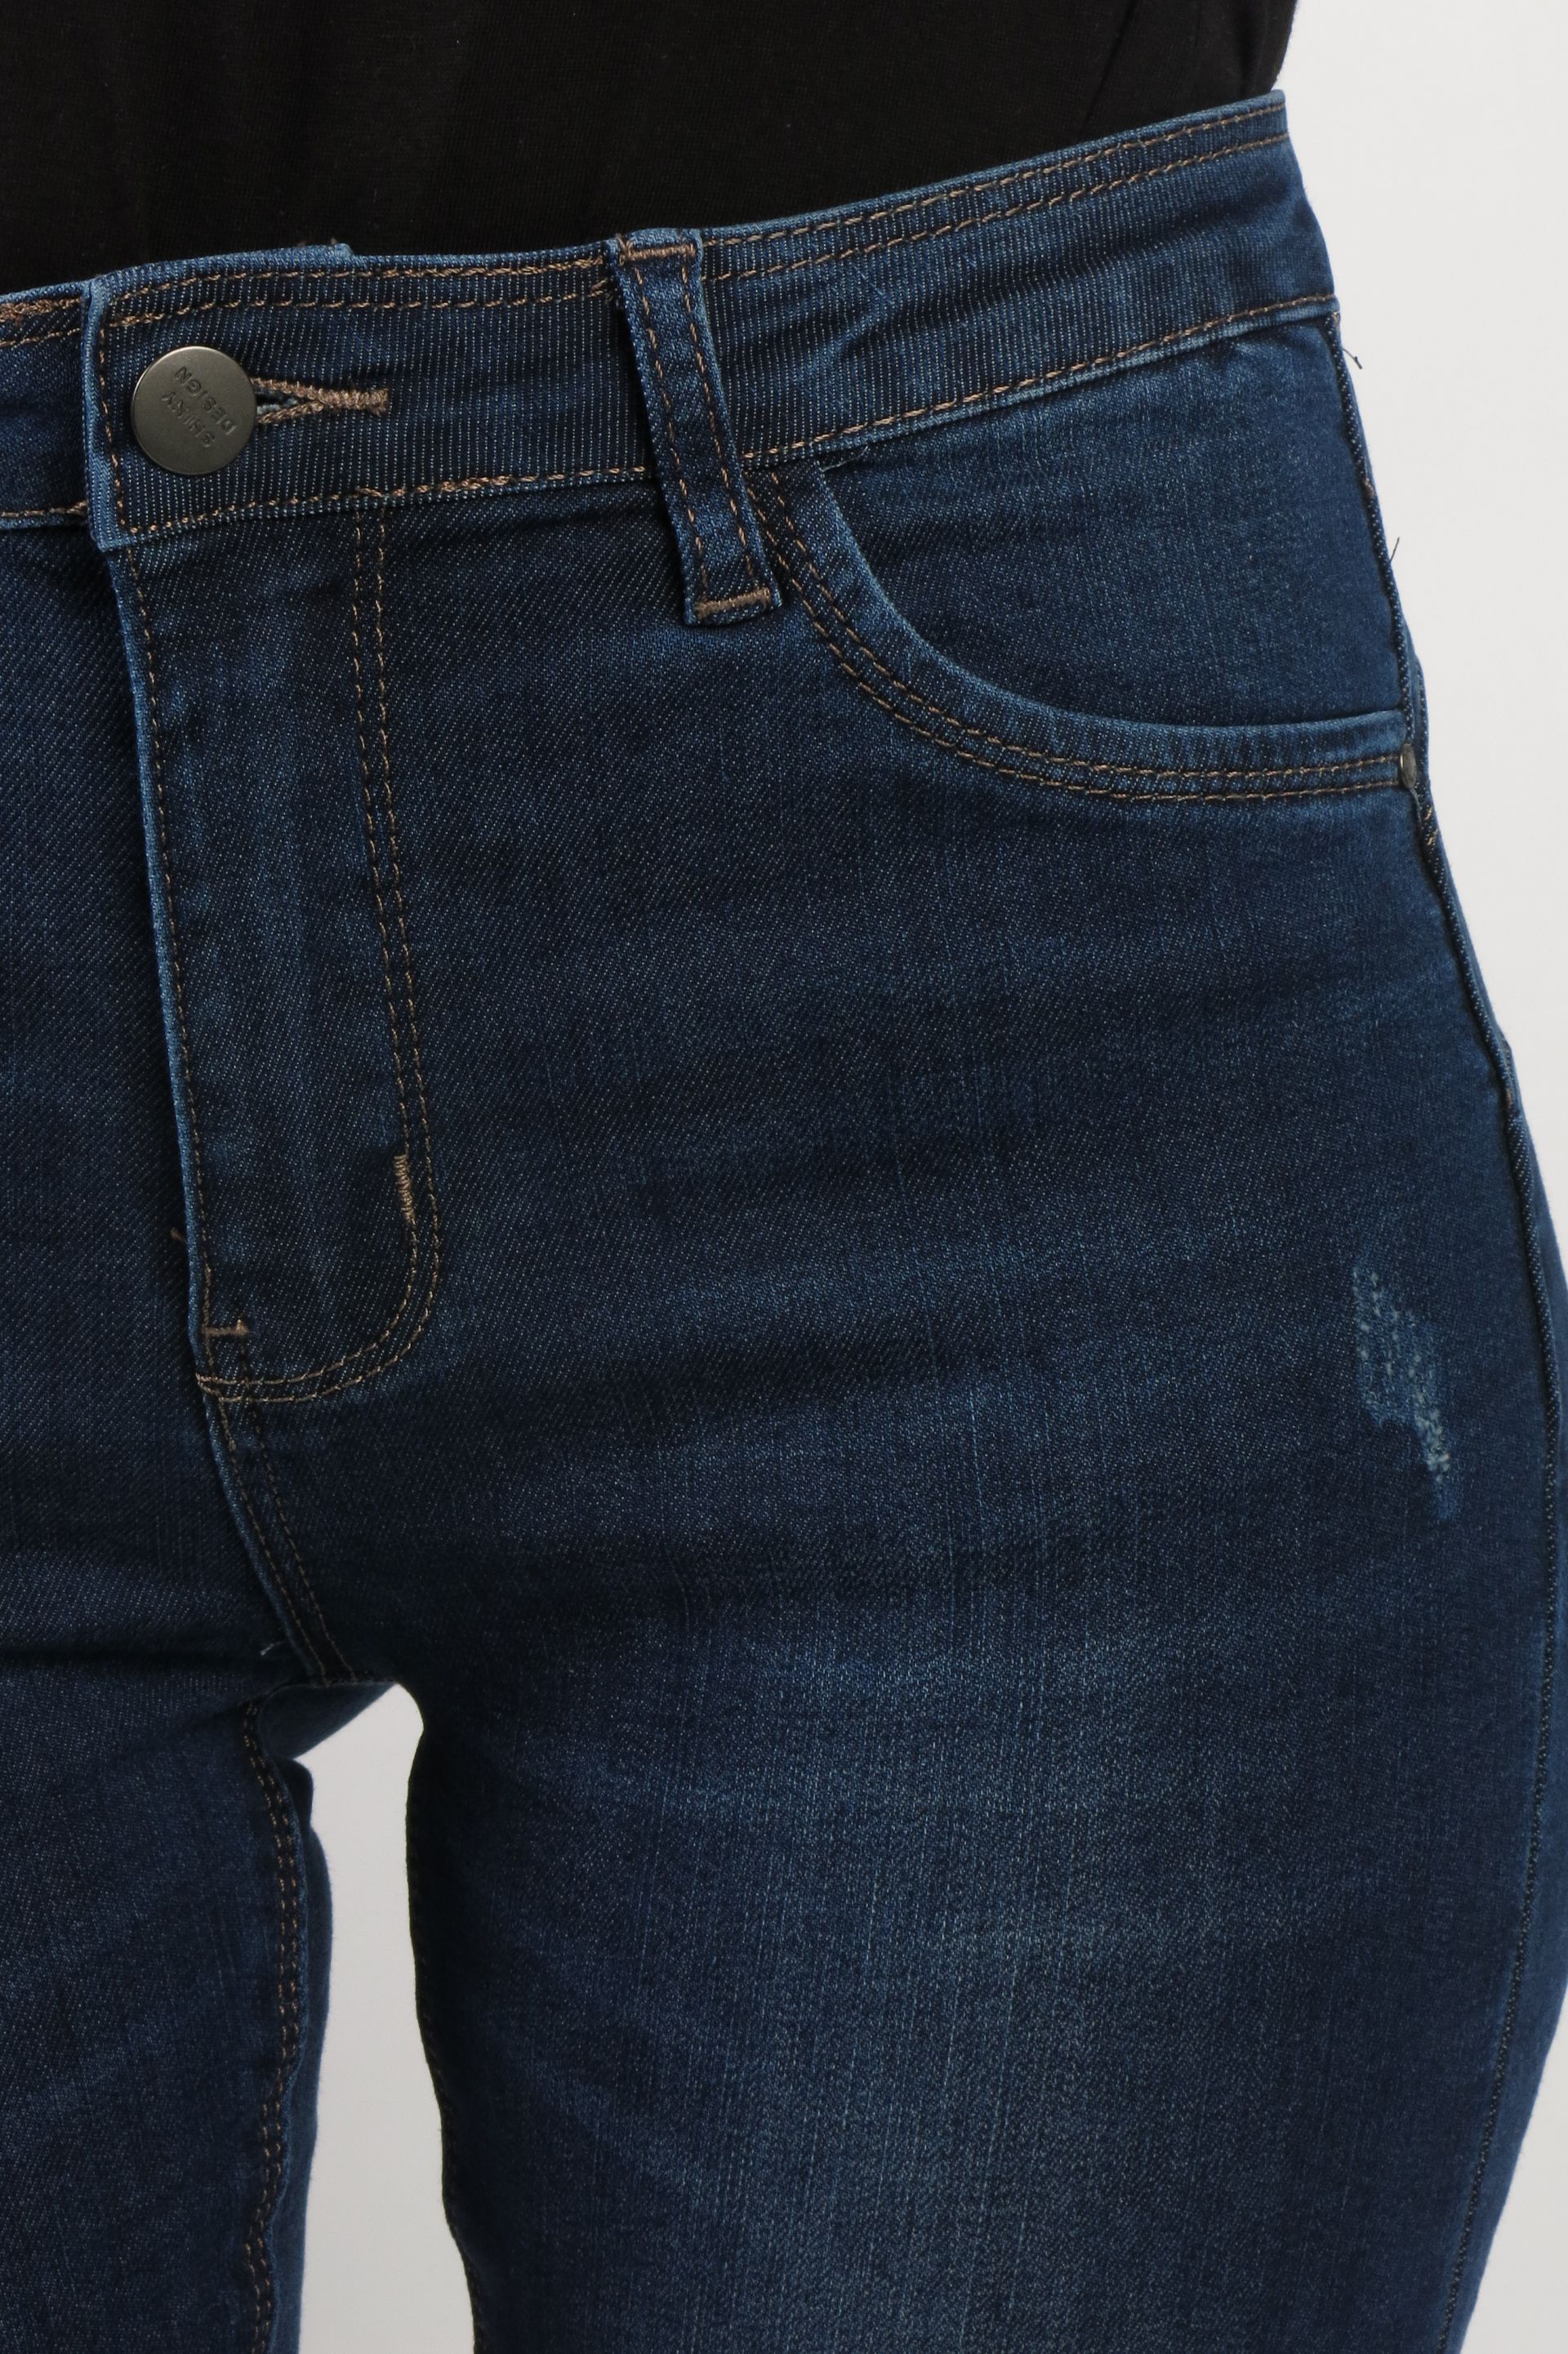 shiny design fashion jeans - photographyinversesquarelaw